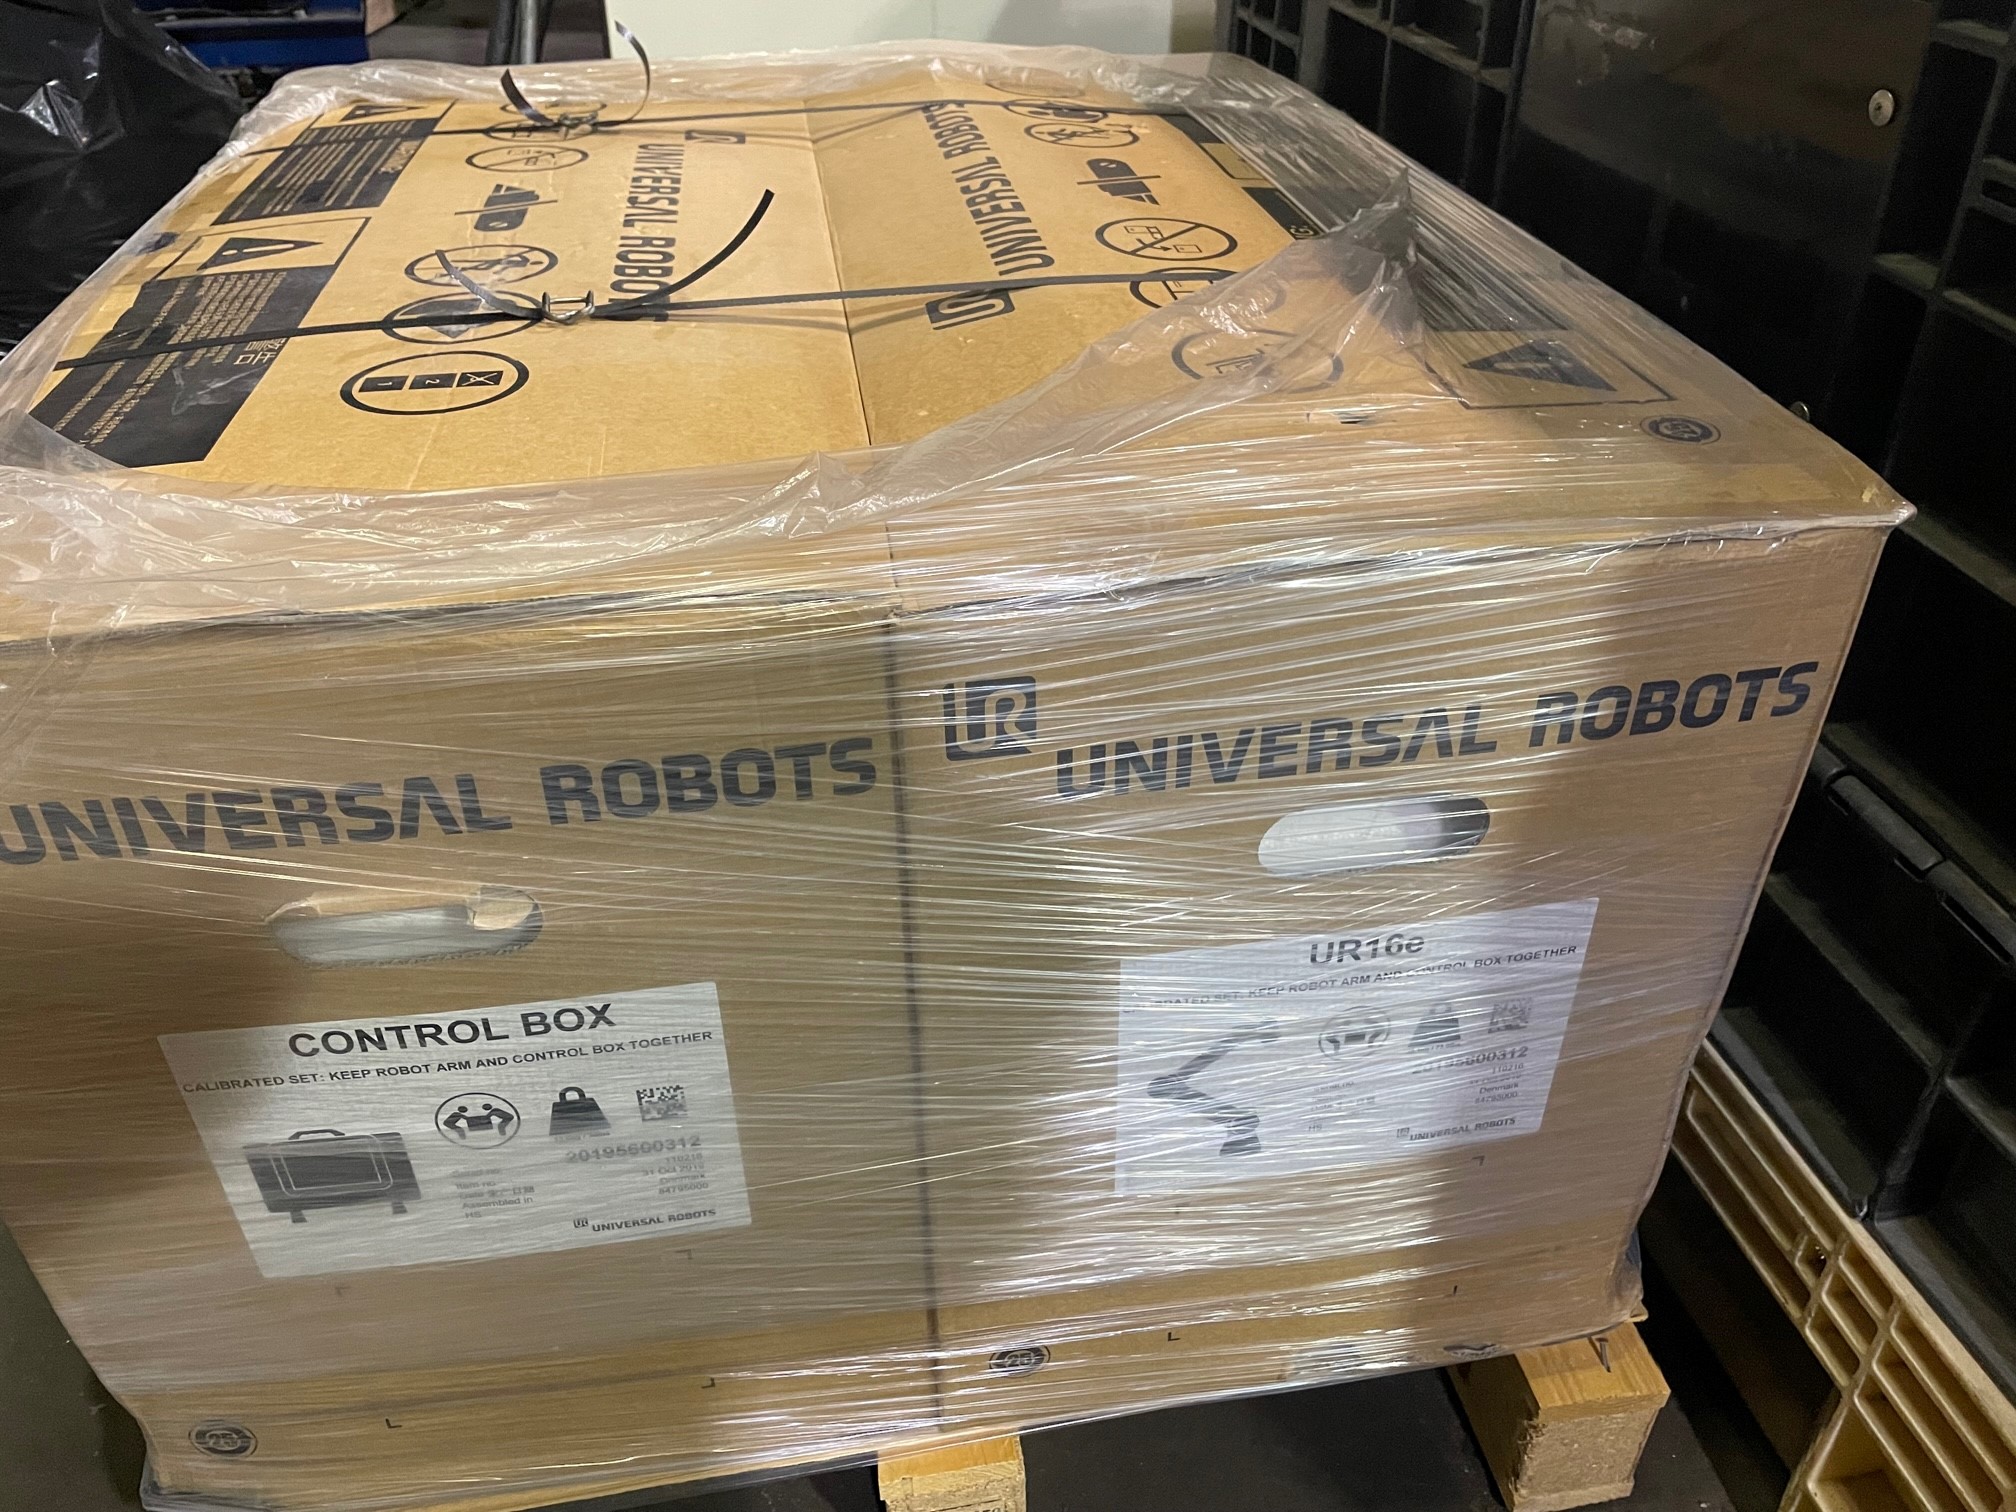 UR16e collaborative robot